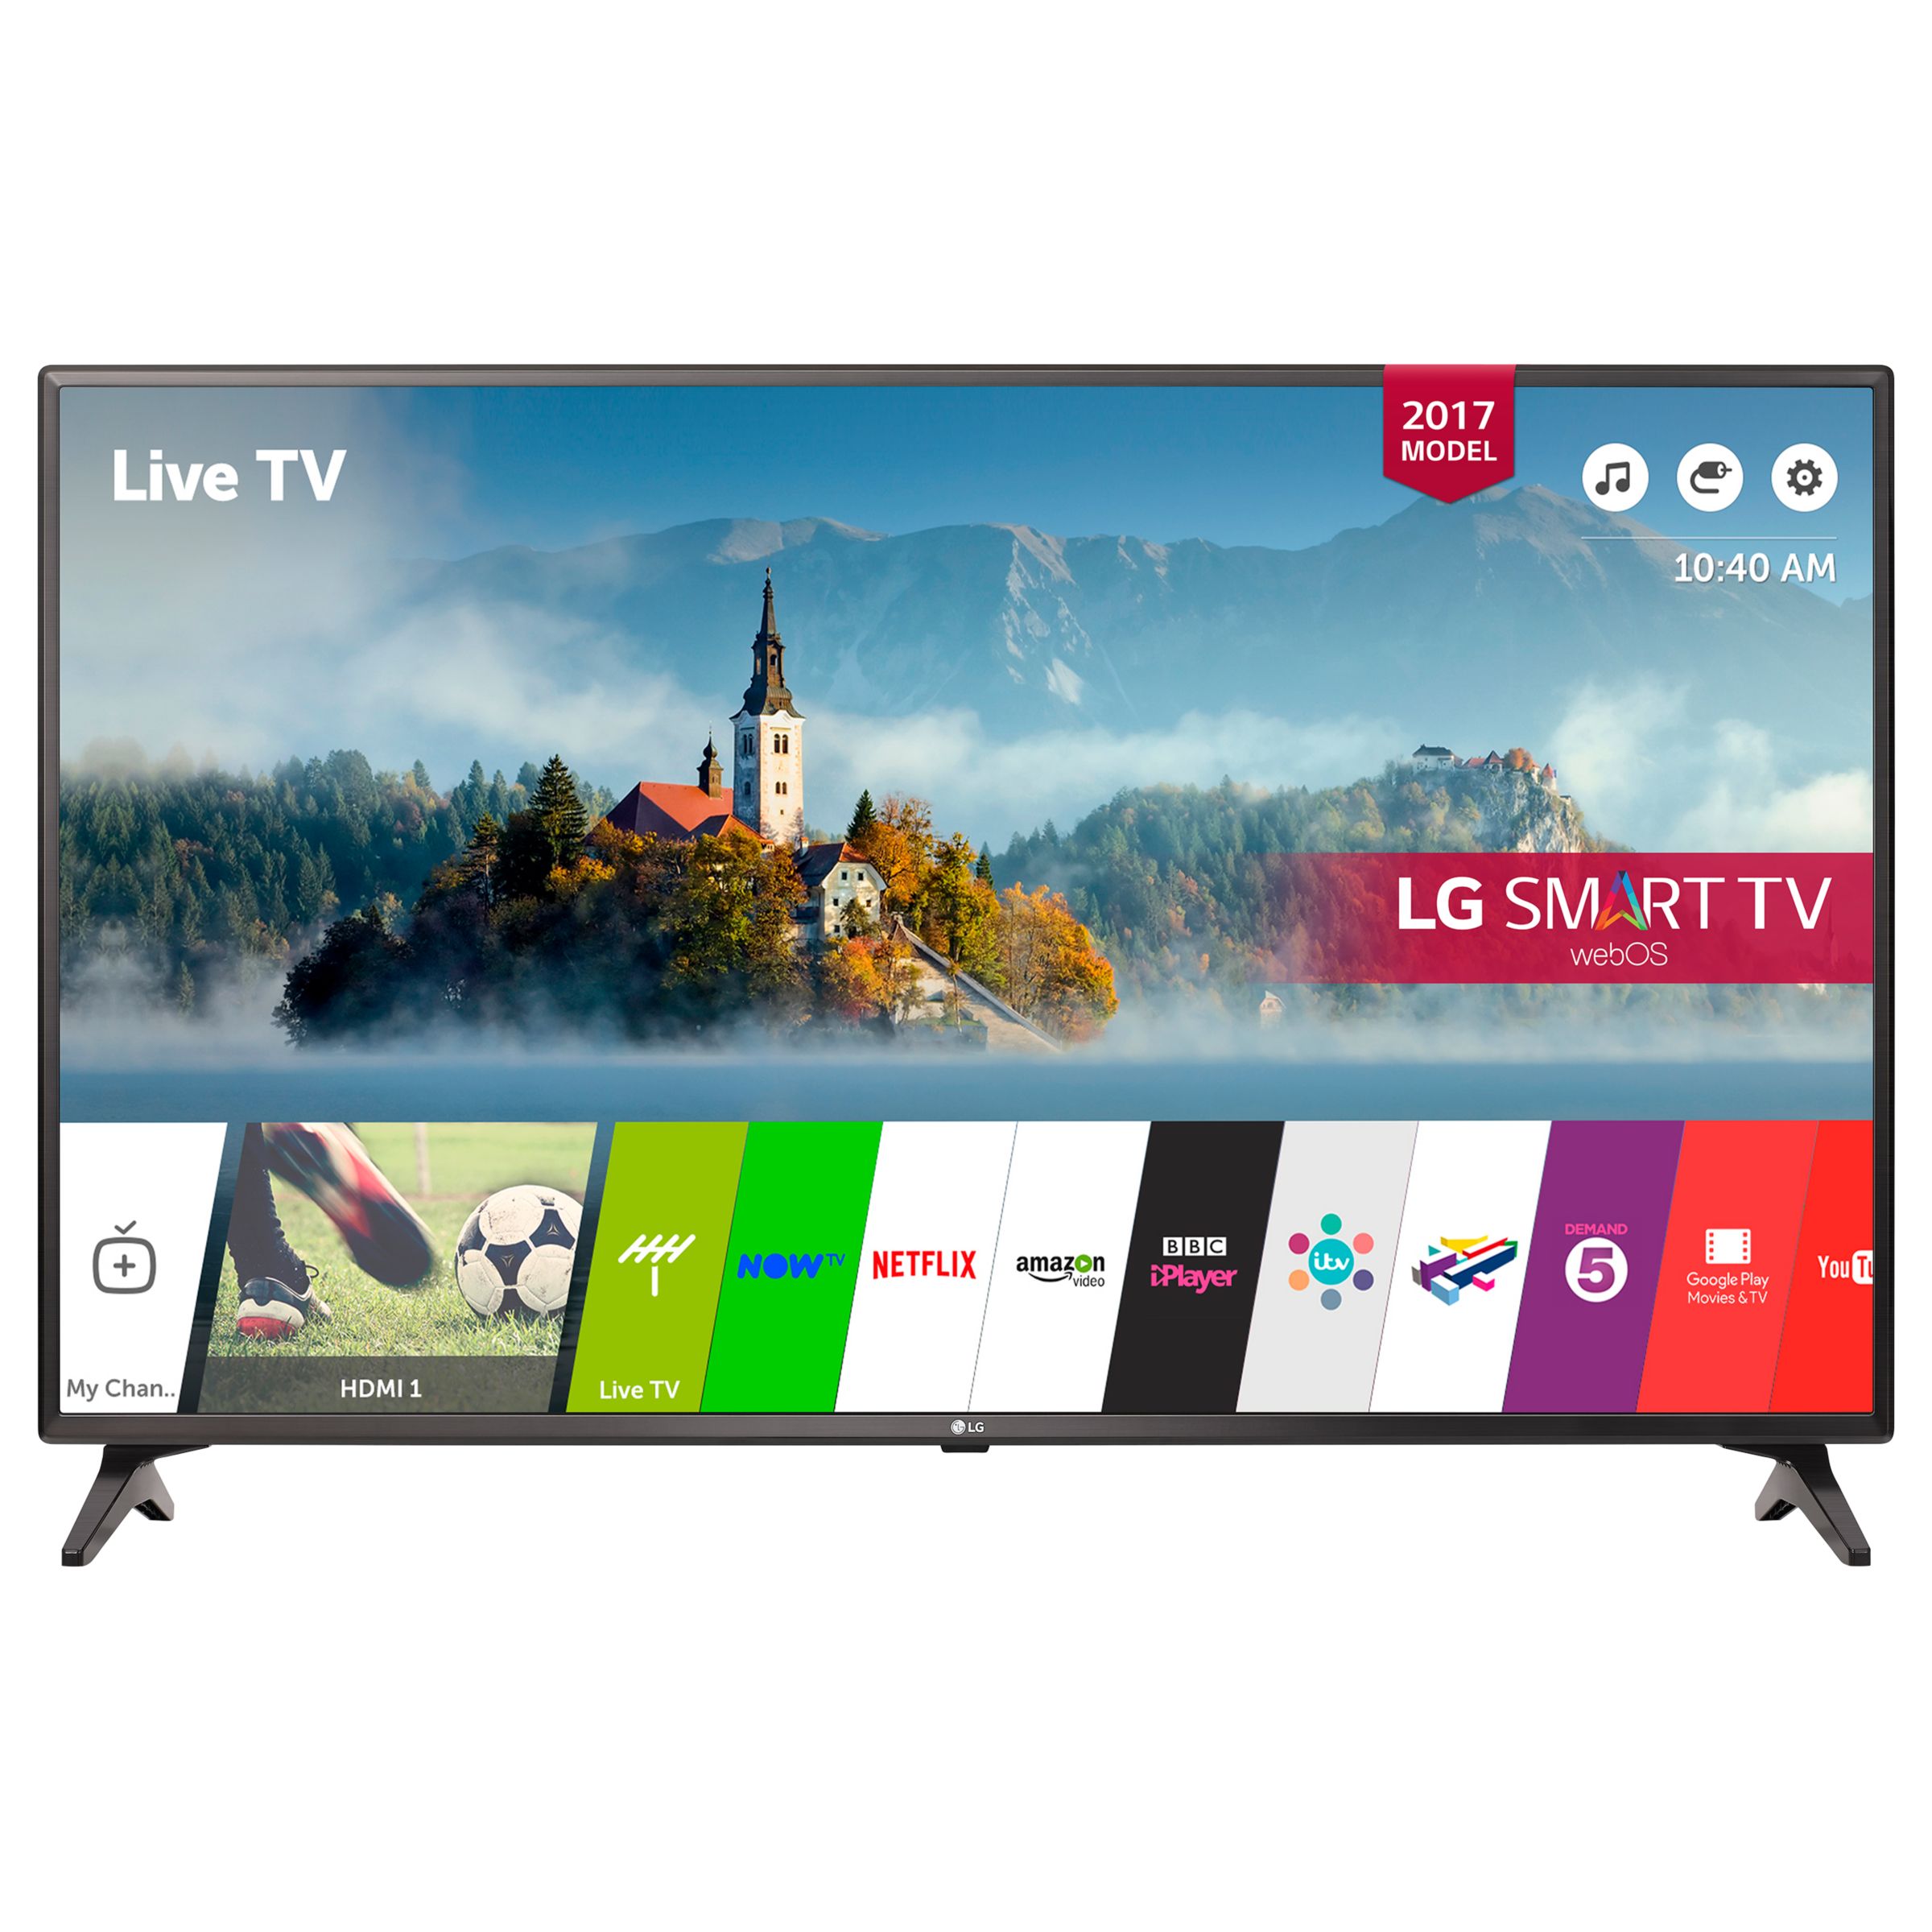 LG 49LJ594V LED Full 1080p Smart TV, 49" with Freesat HD & Freeview Play, Black